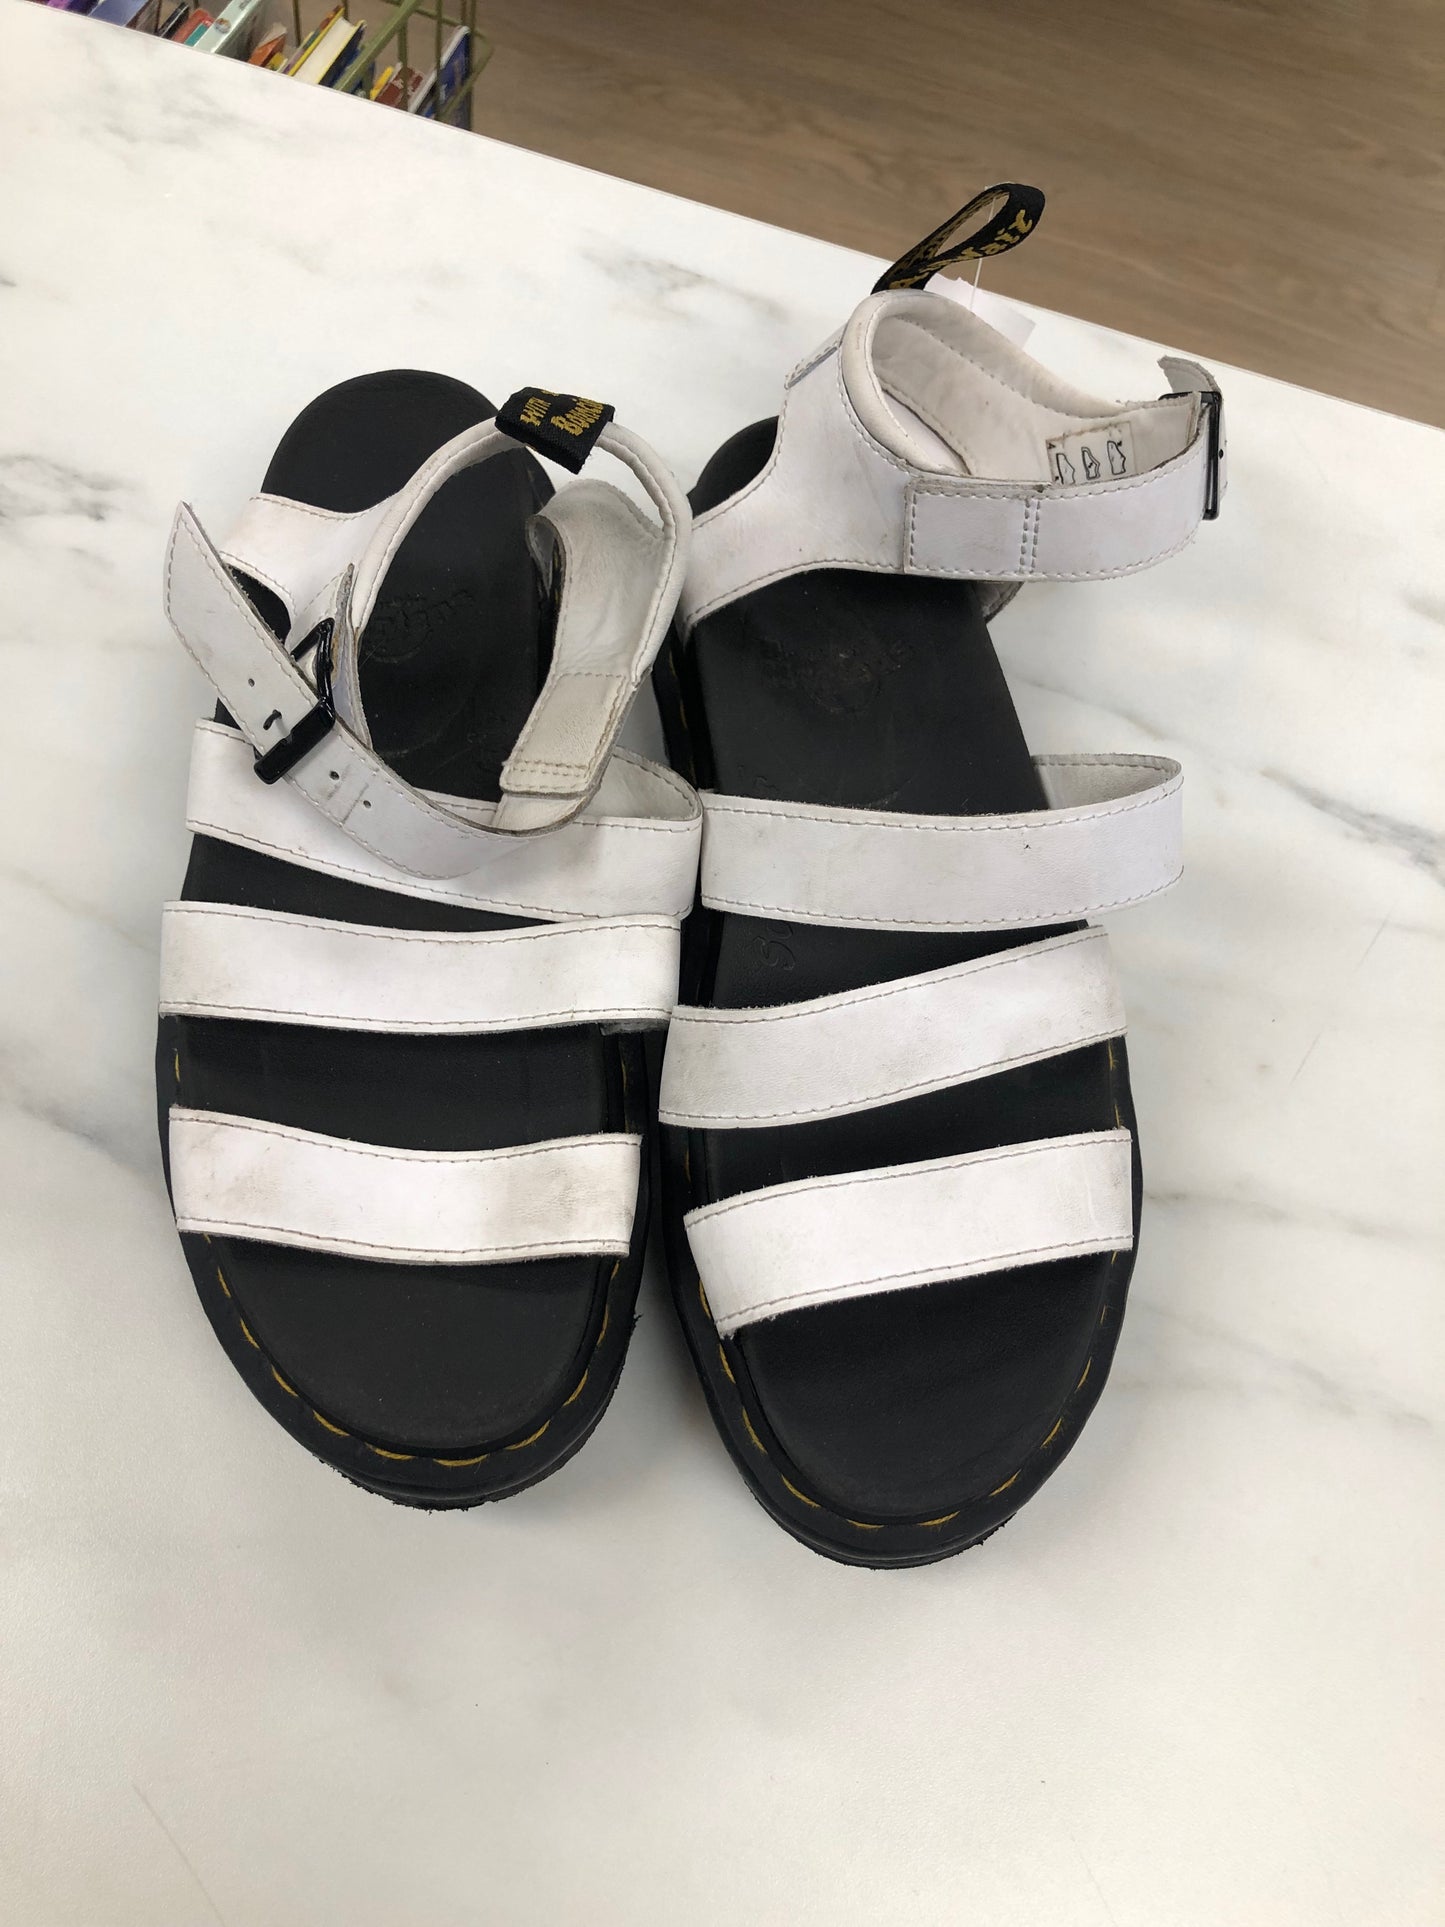 Dr Martens Adult Size 9 White Sandal Shoes/Boots